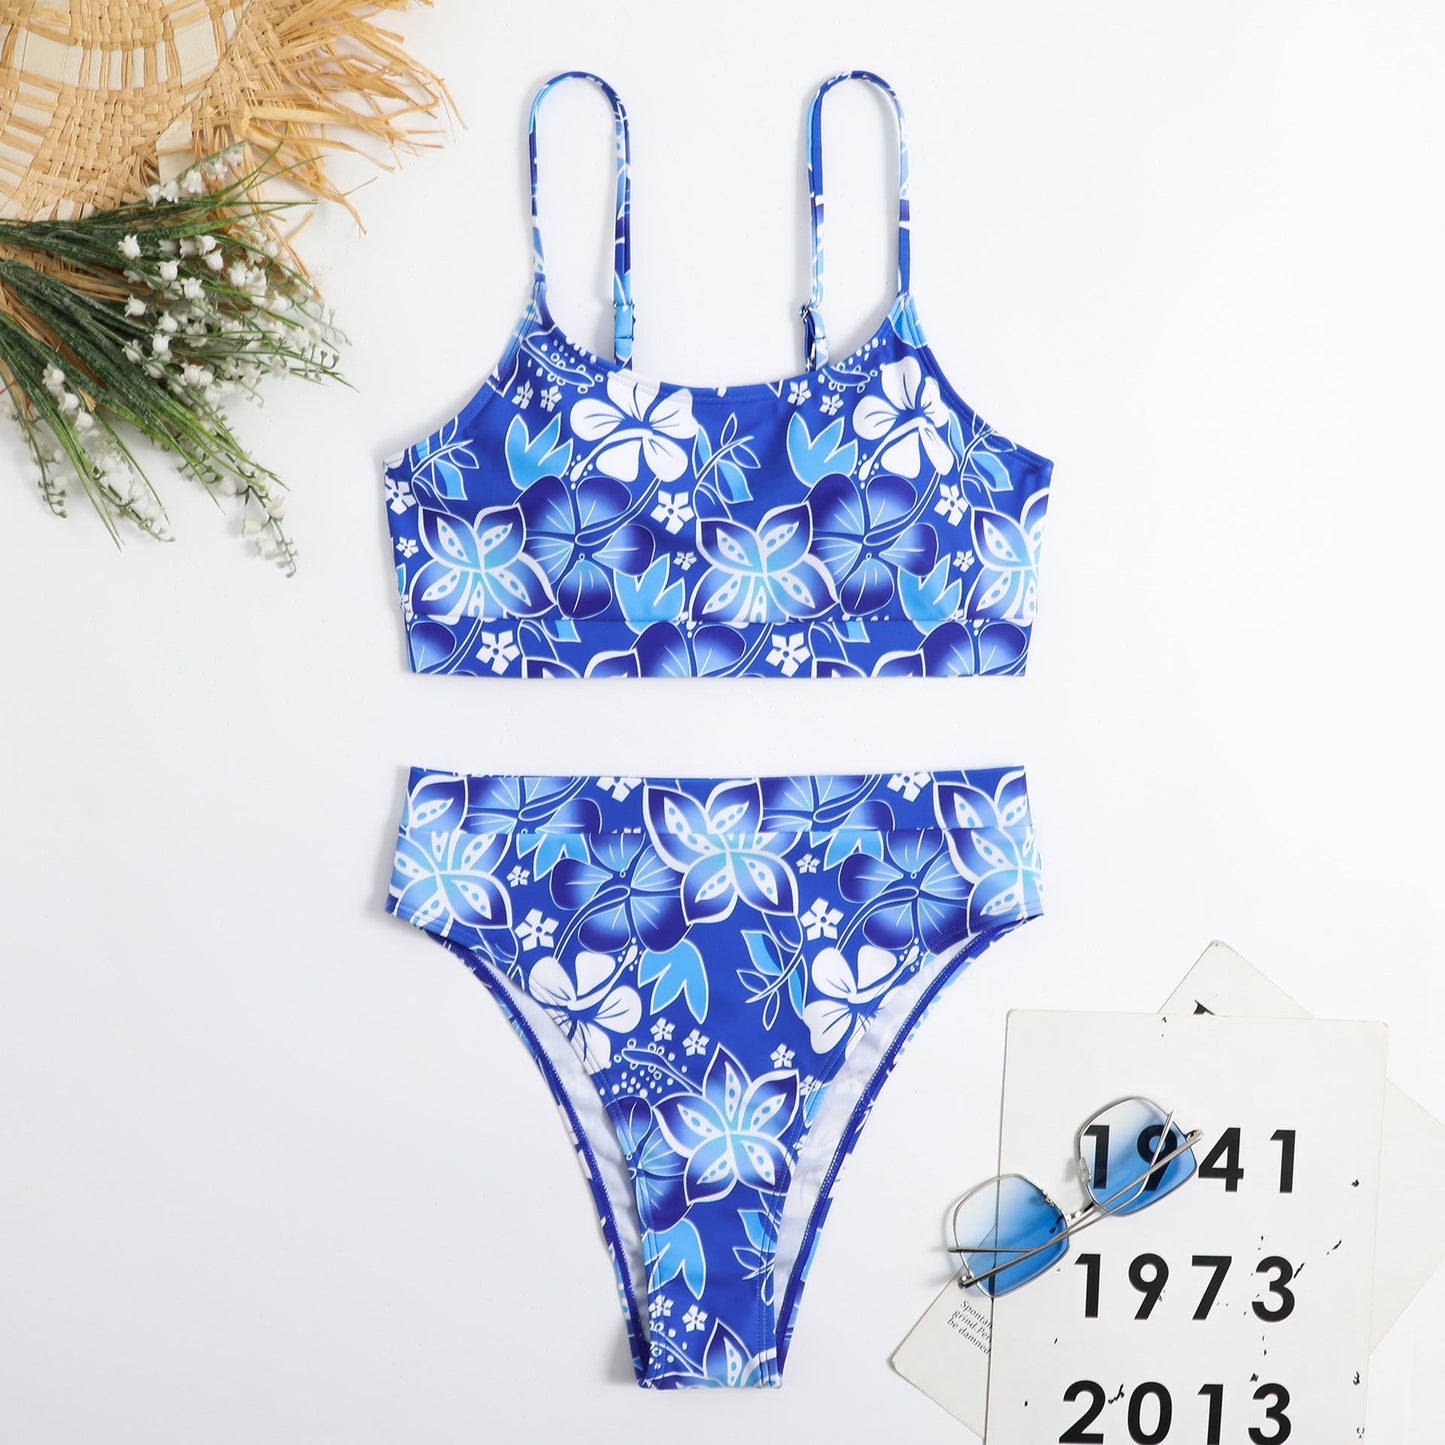 Amalia® | Bikini with tropical flowers